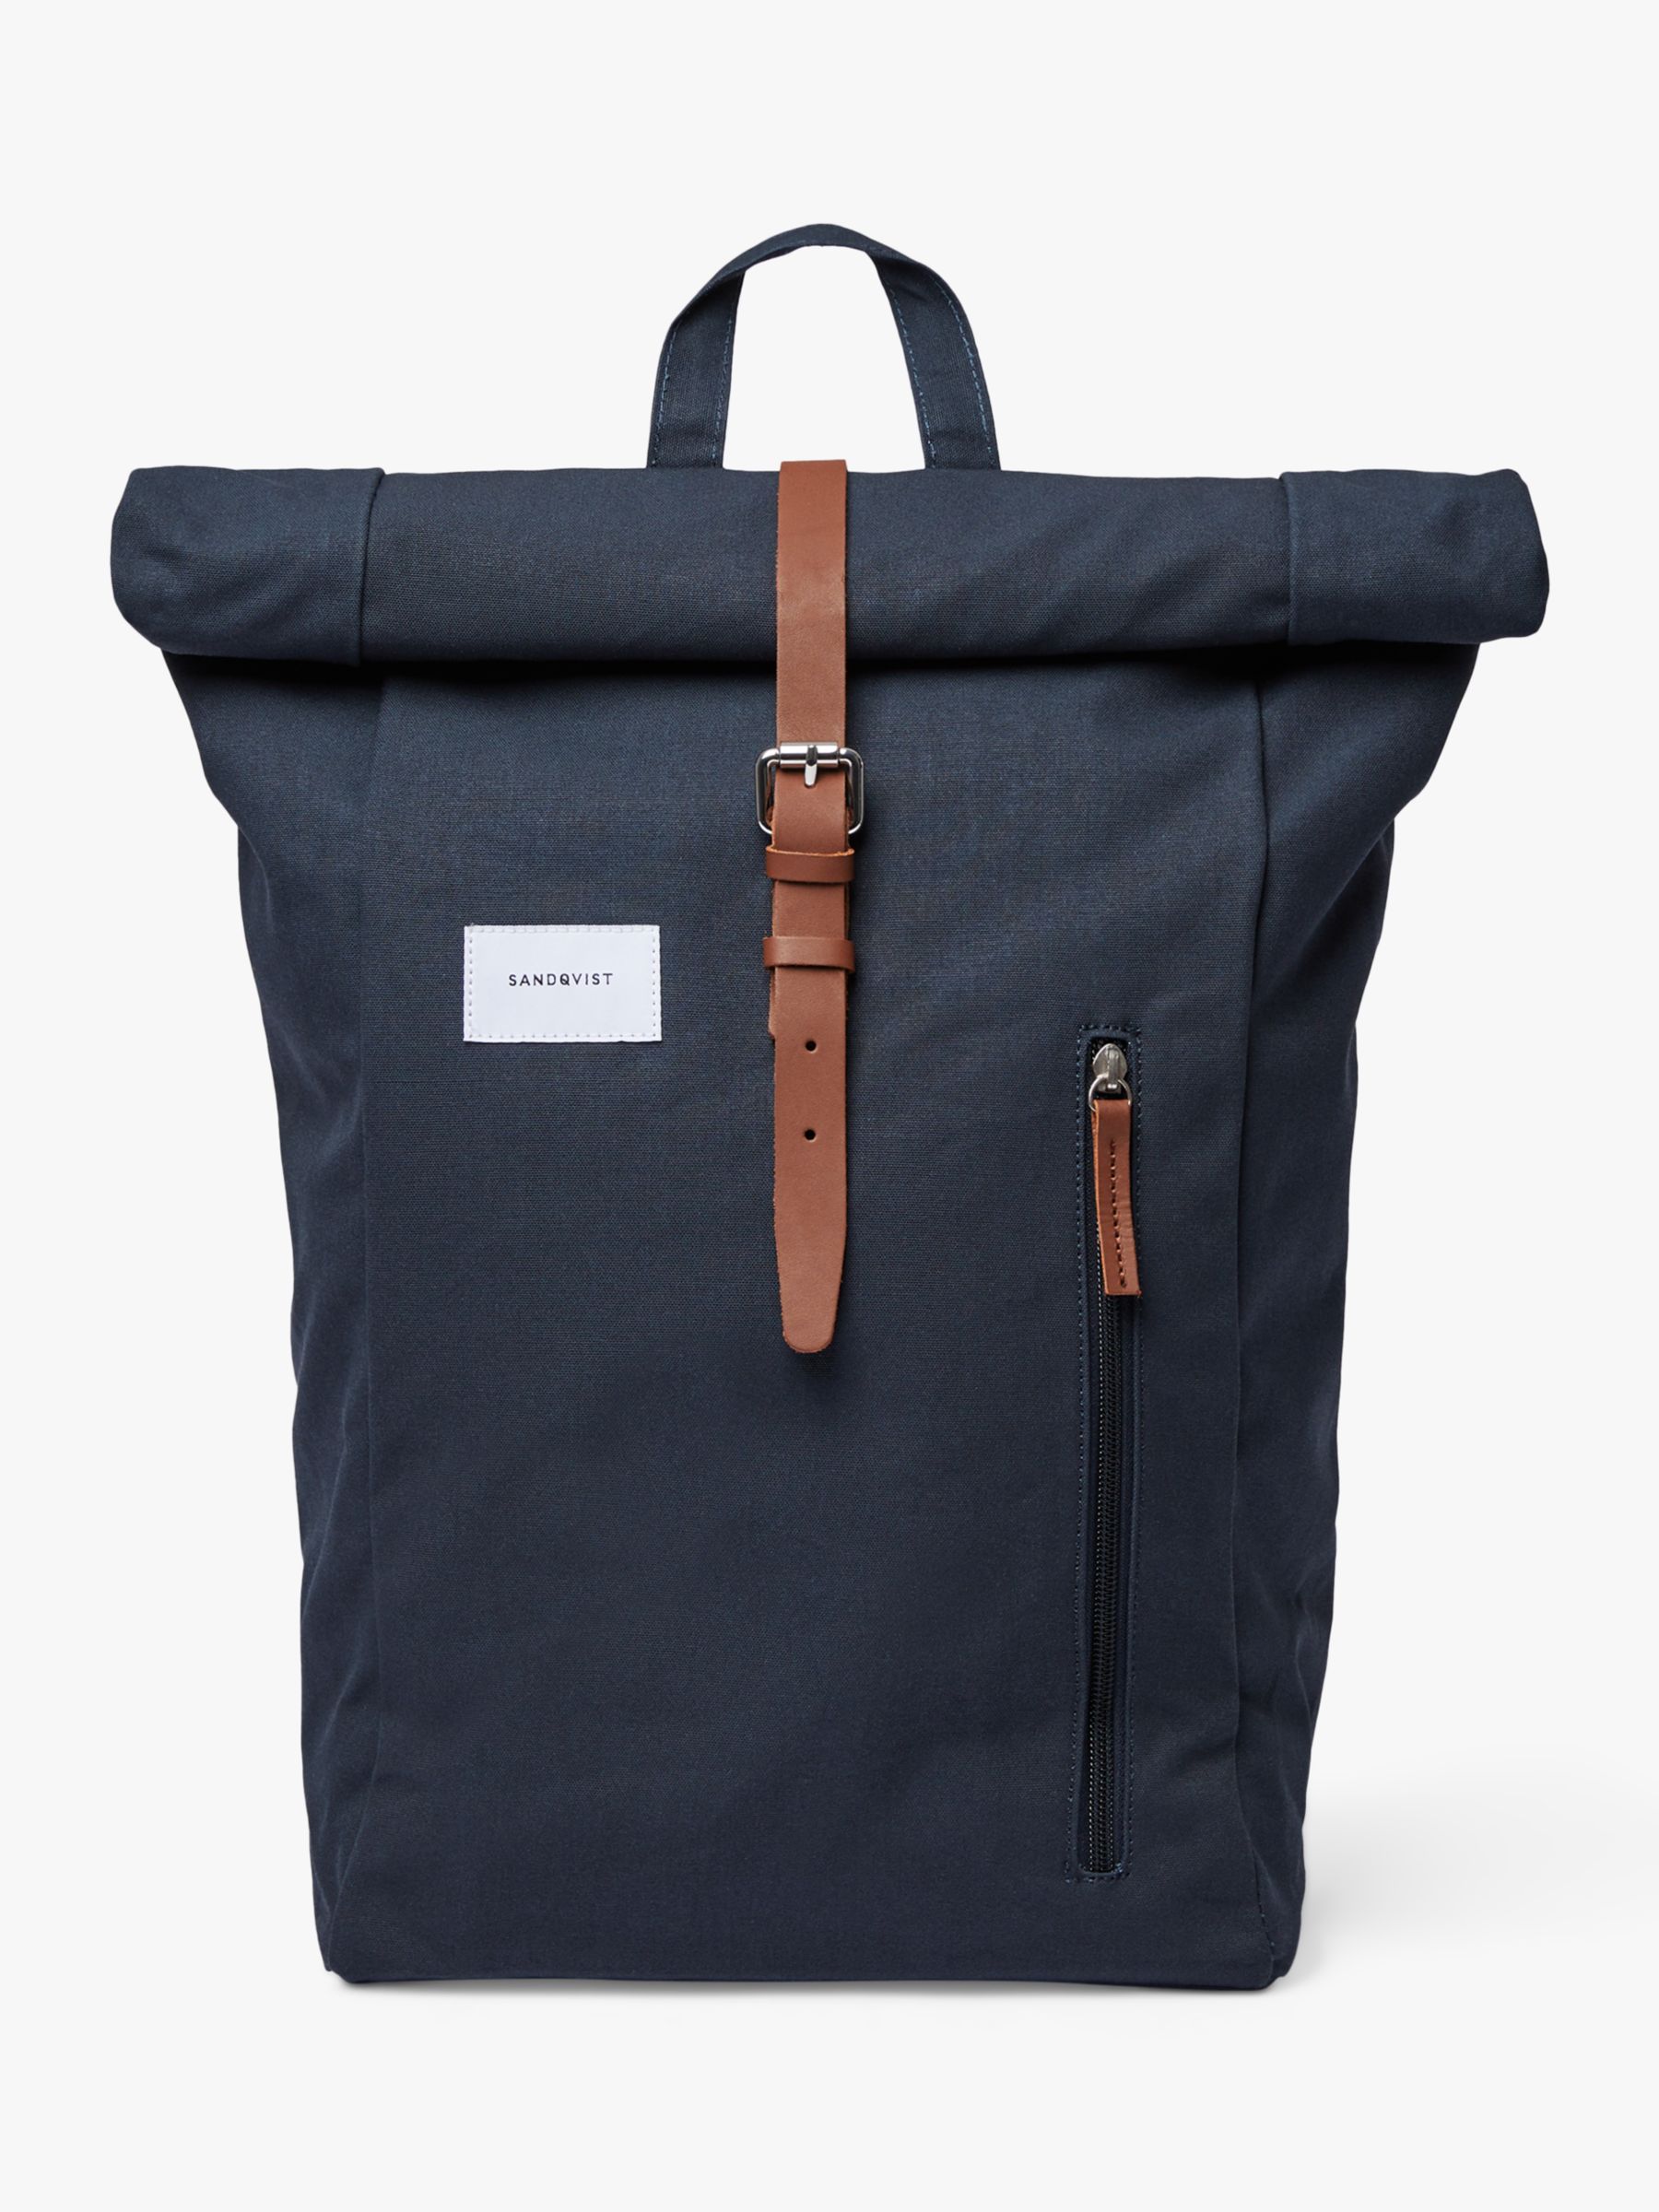 Данте Рюкзак Sandqvist, темно-синий мужской водонепроницаемый рюкзак из ткани оксфорд для ноутбука 16 дюймов